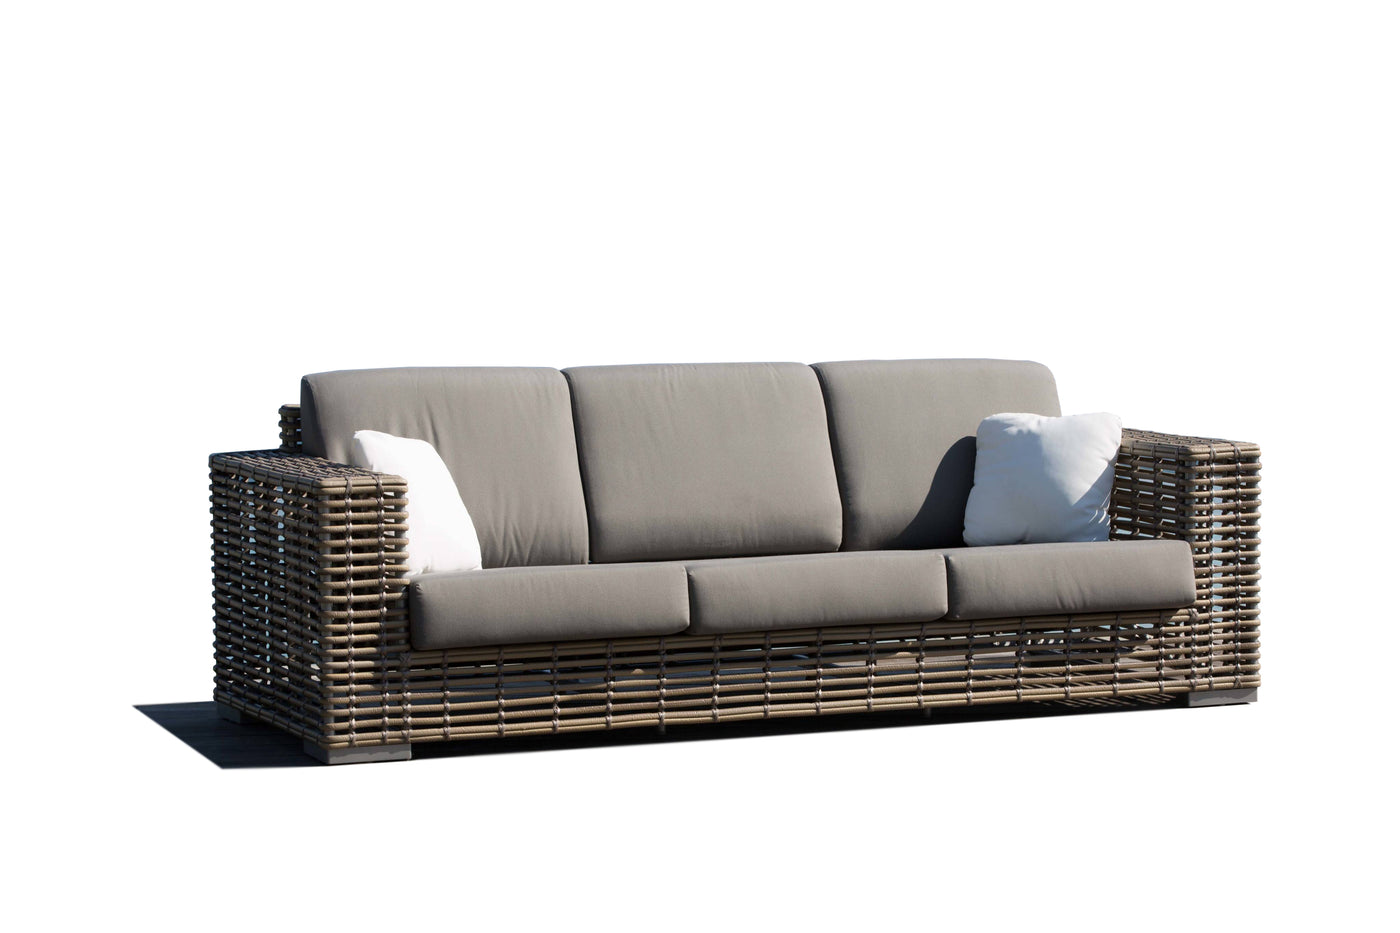 Castries sofa by Skyline Design